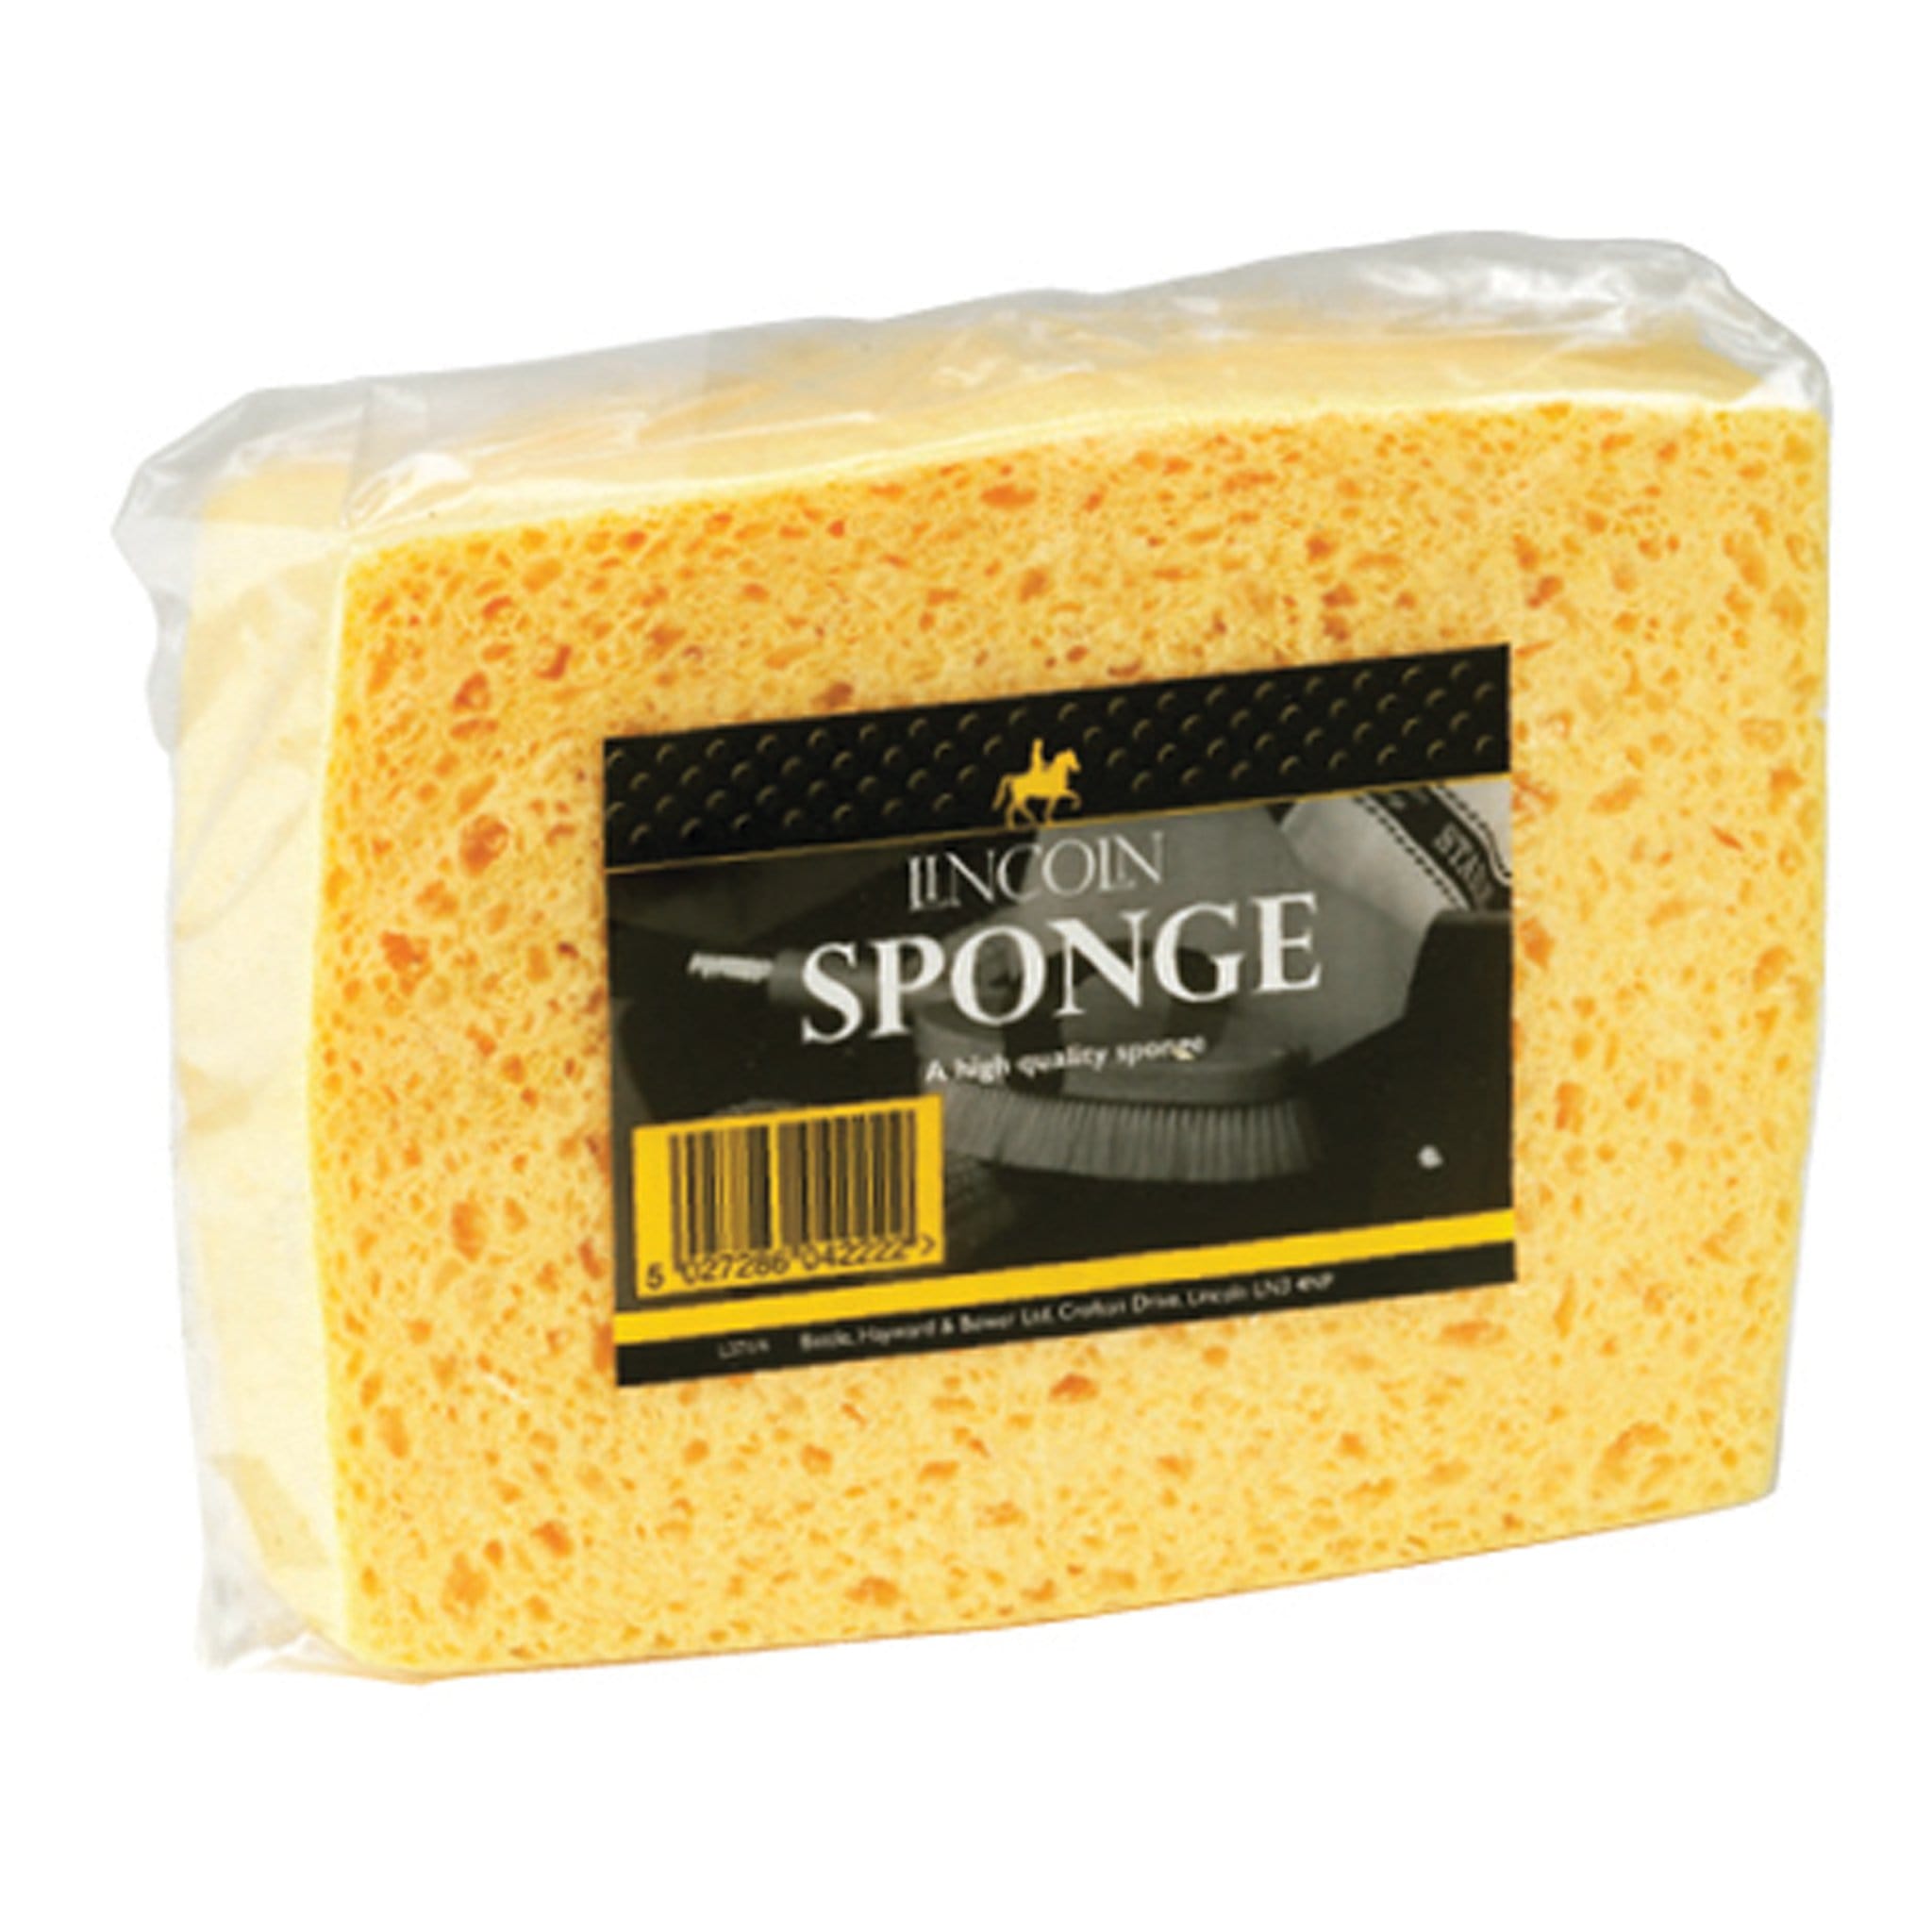 Lincoln Sponge 4222